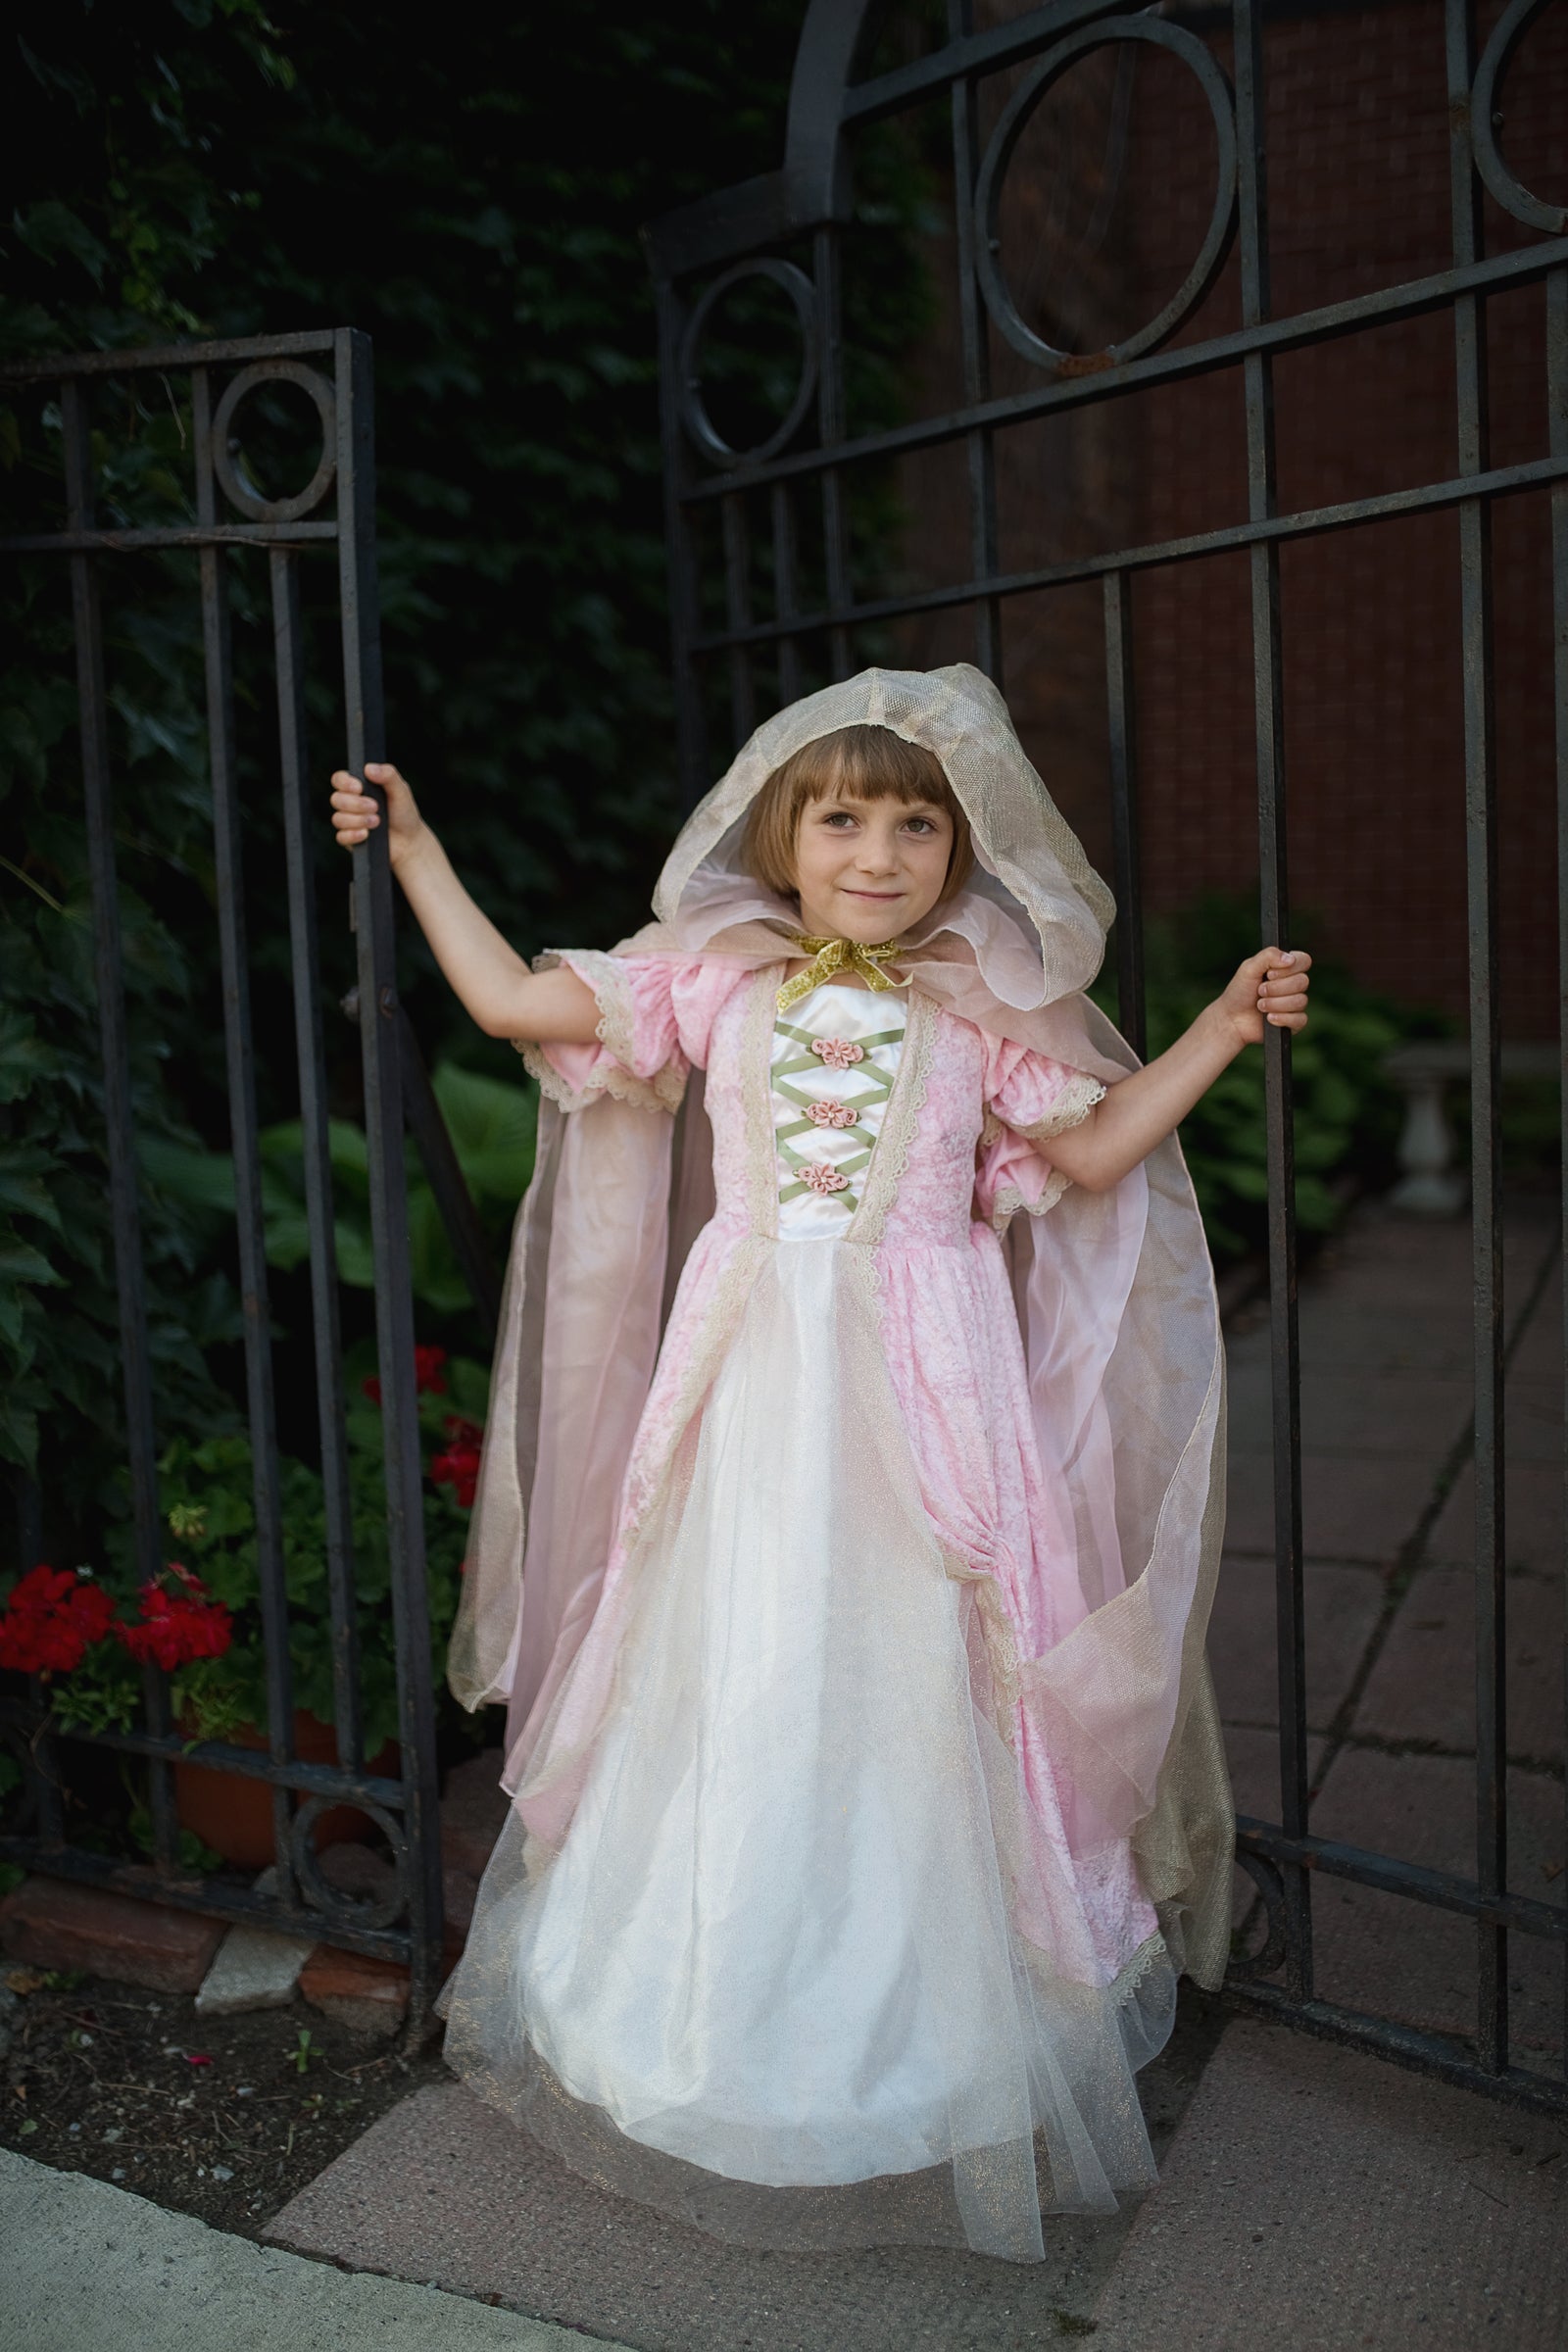 Fairycore Princess Dress Fairy Dresses Romantic Royalcore